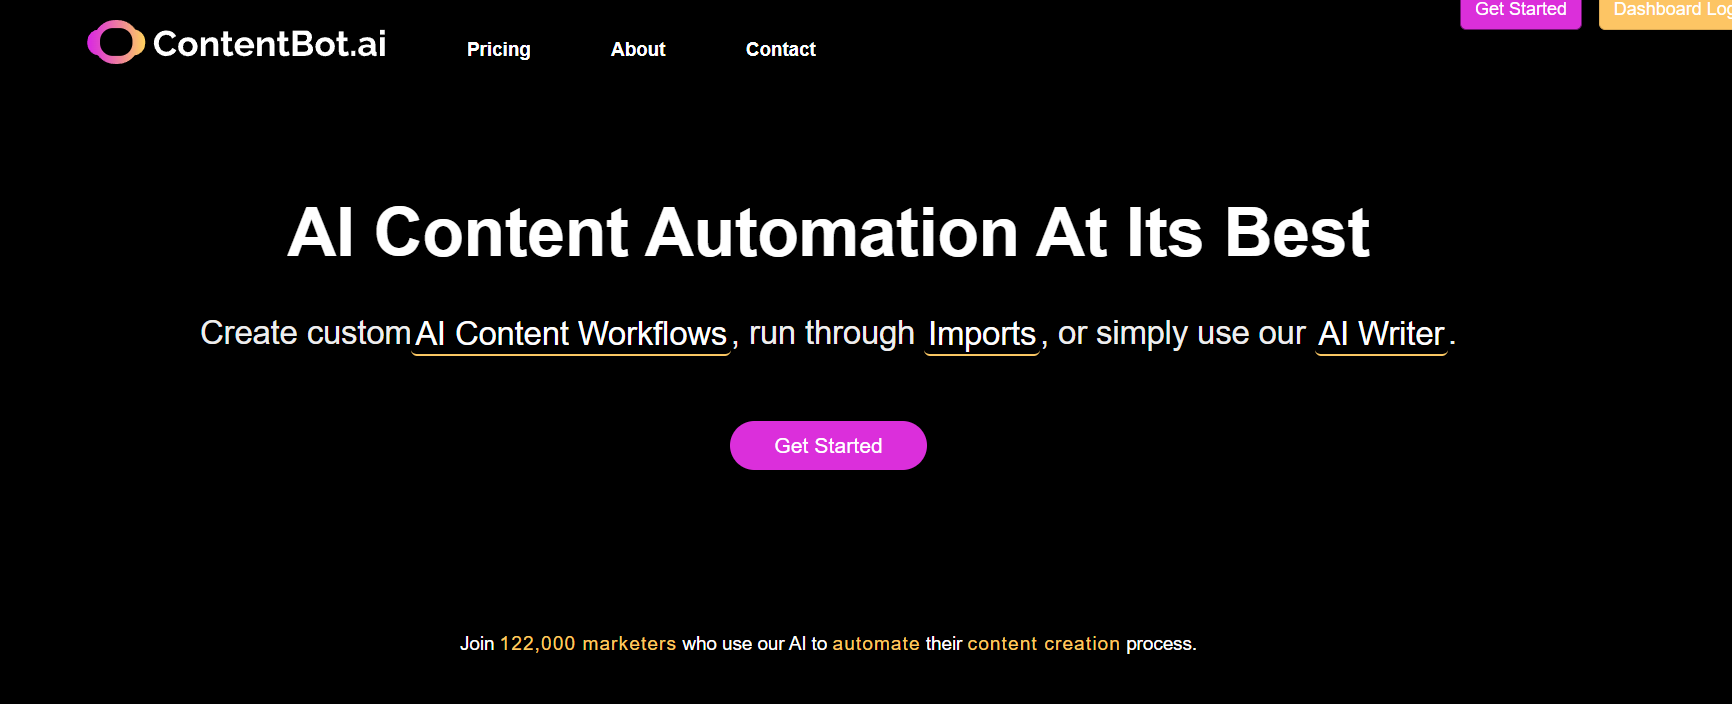 ContentBotai-Homepage